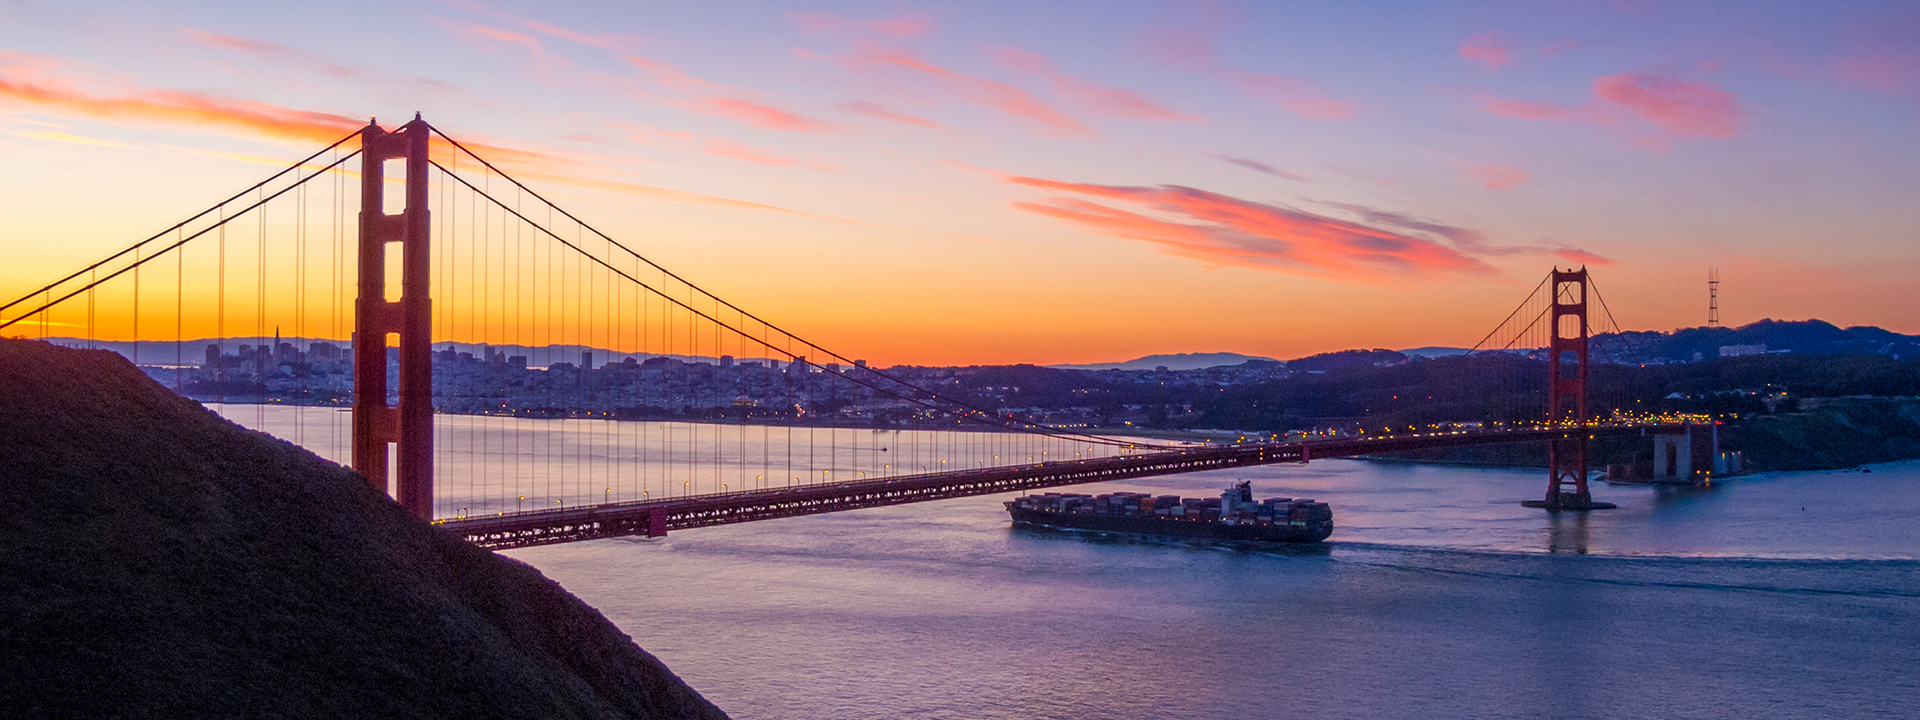 Local Touch - San Francisco's Golden Gate Bridge